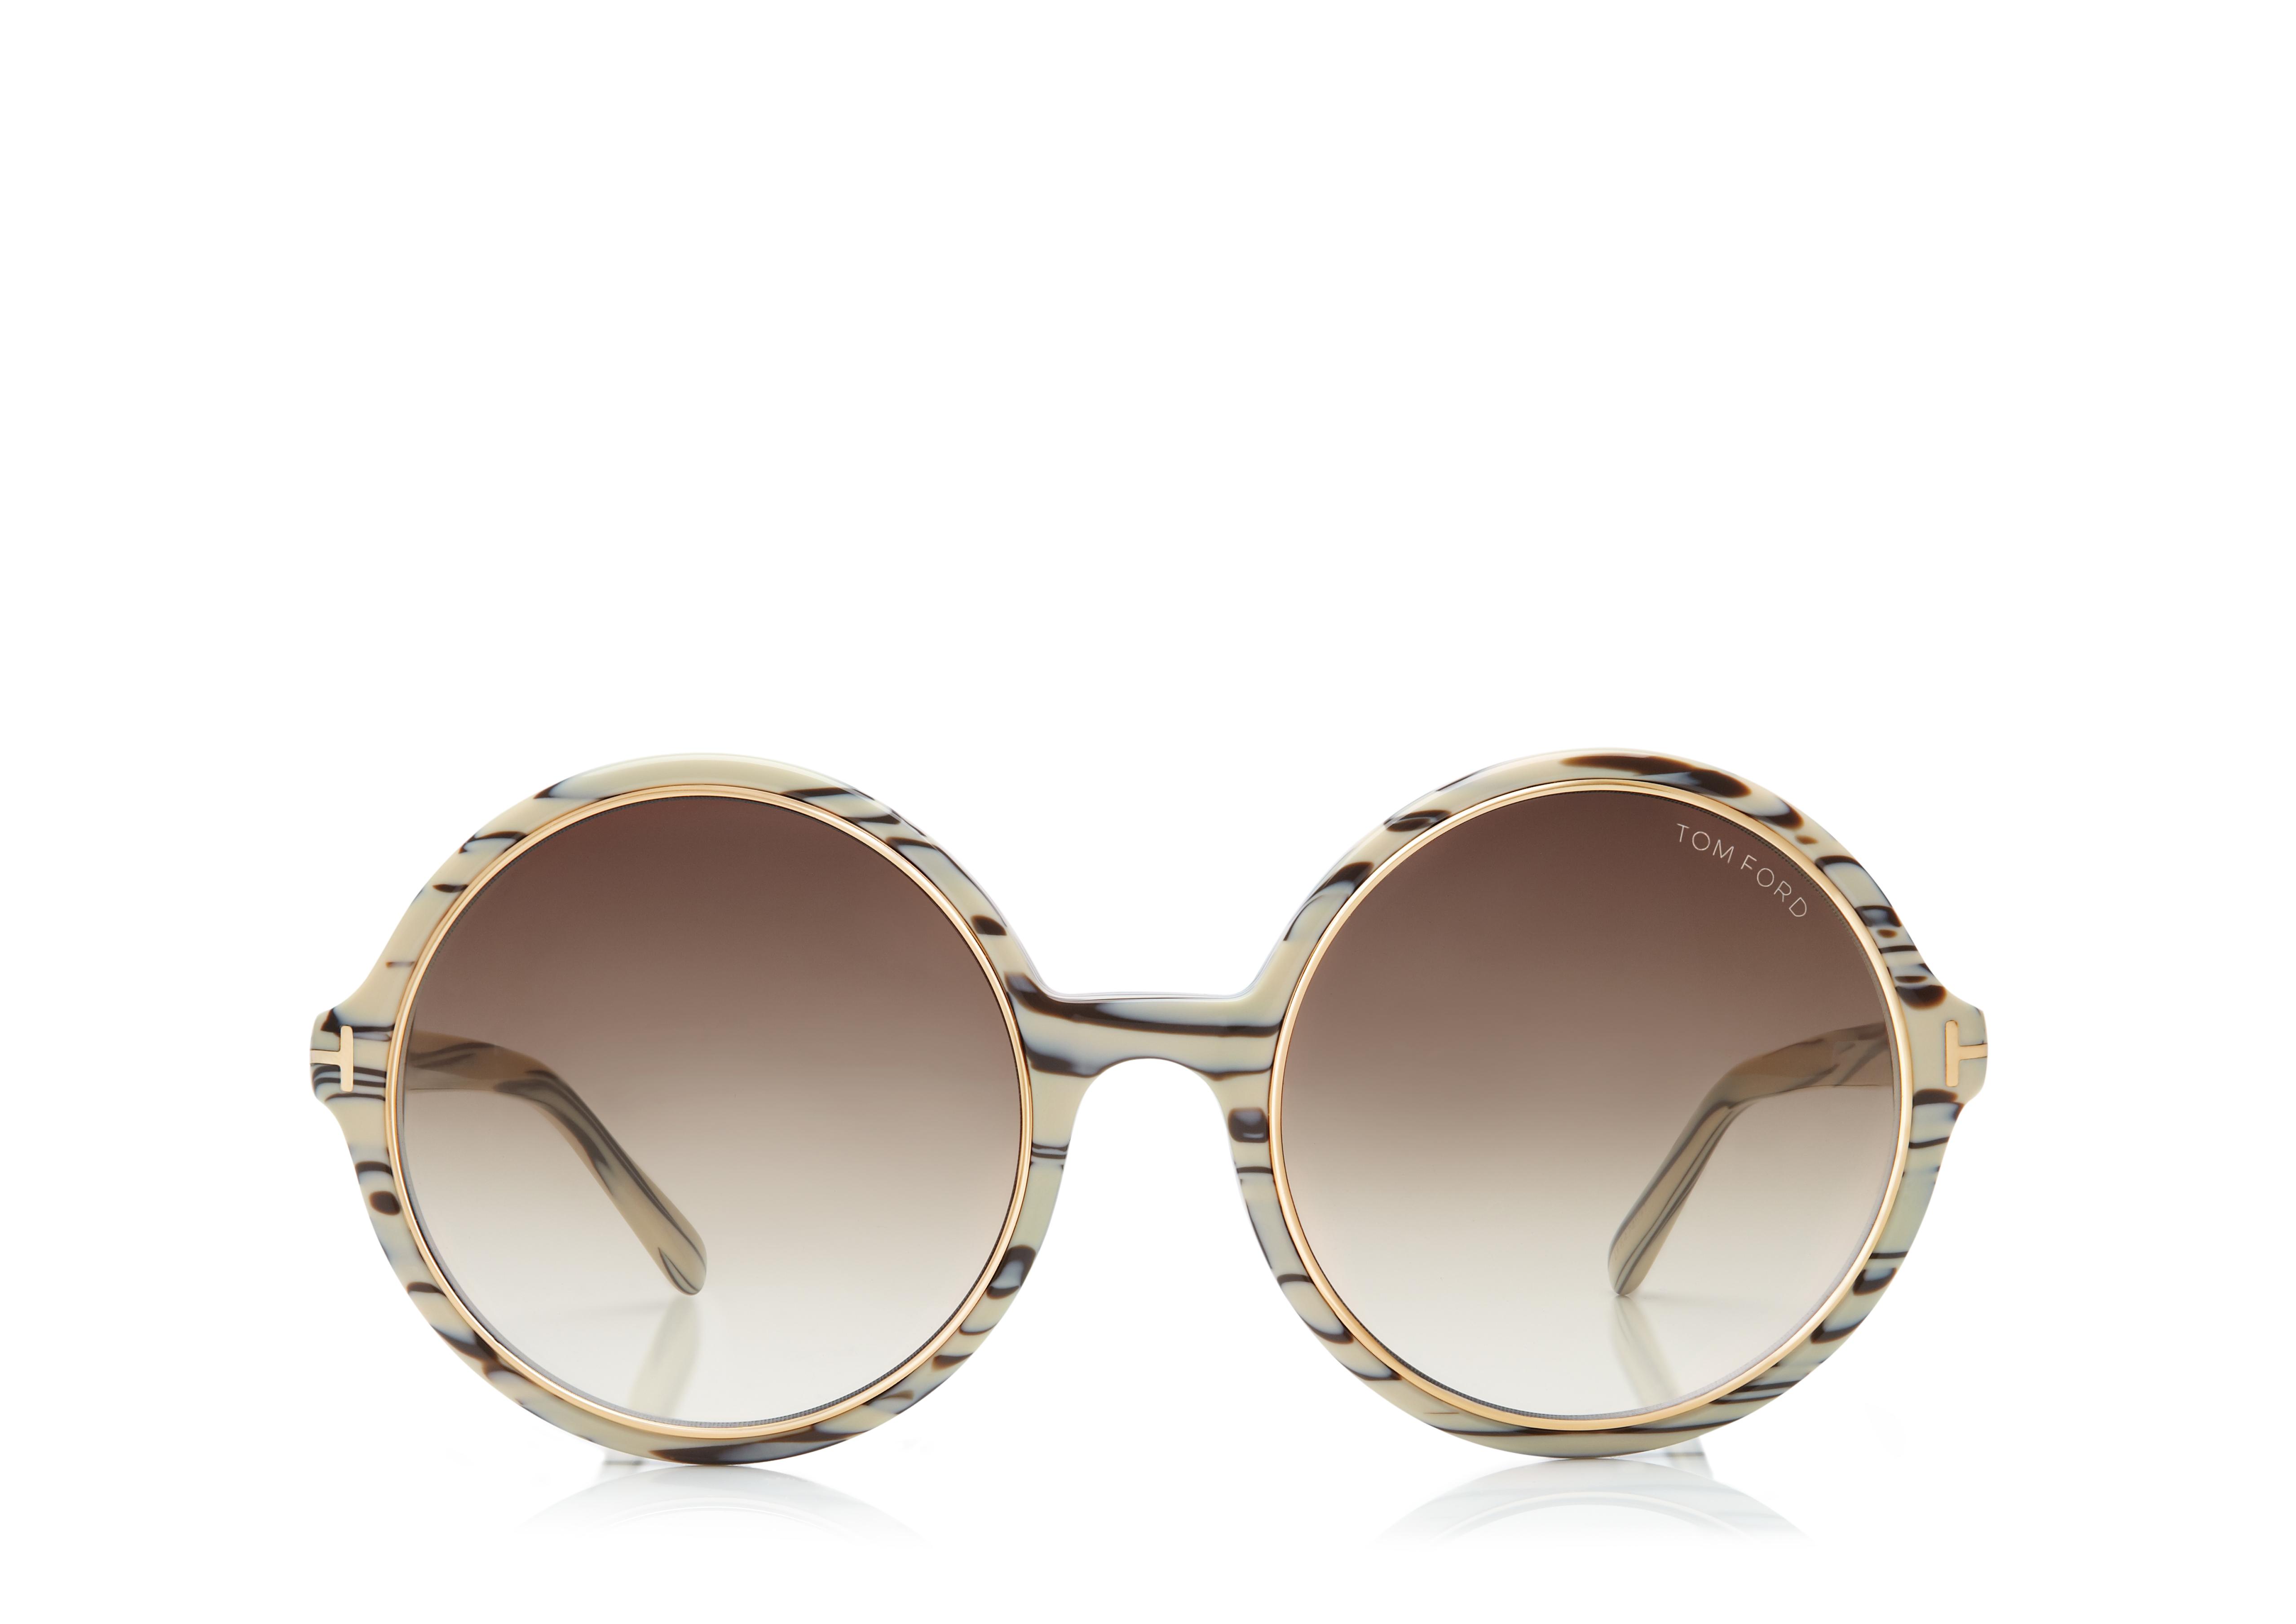 Tom ford eyewear carrie round plastic sunglasses #1